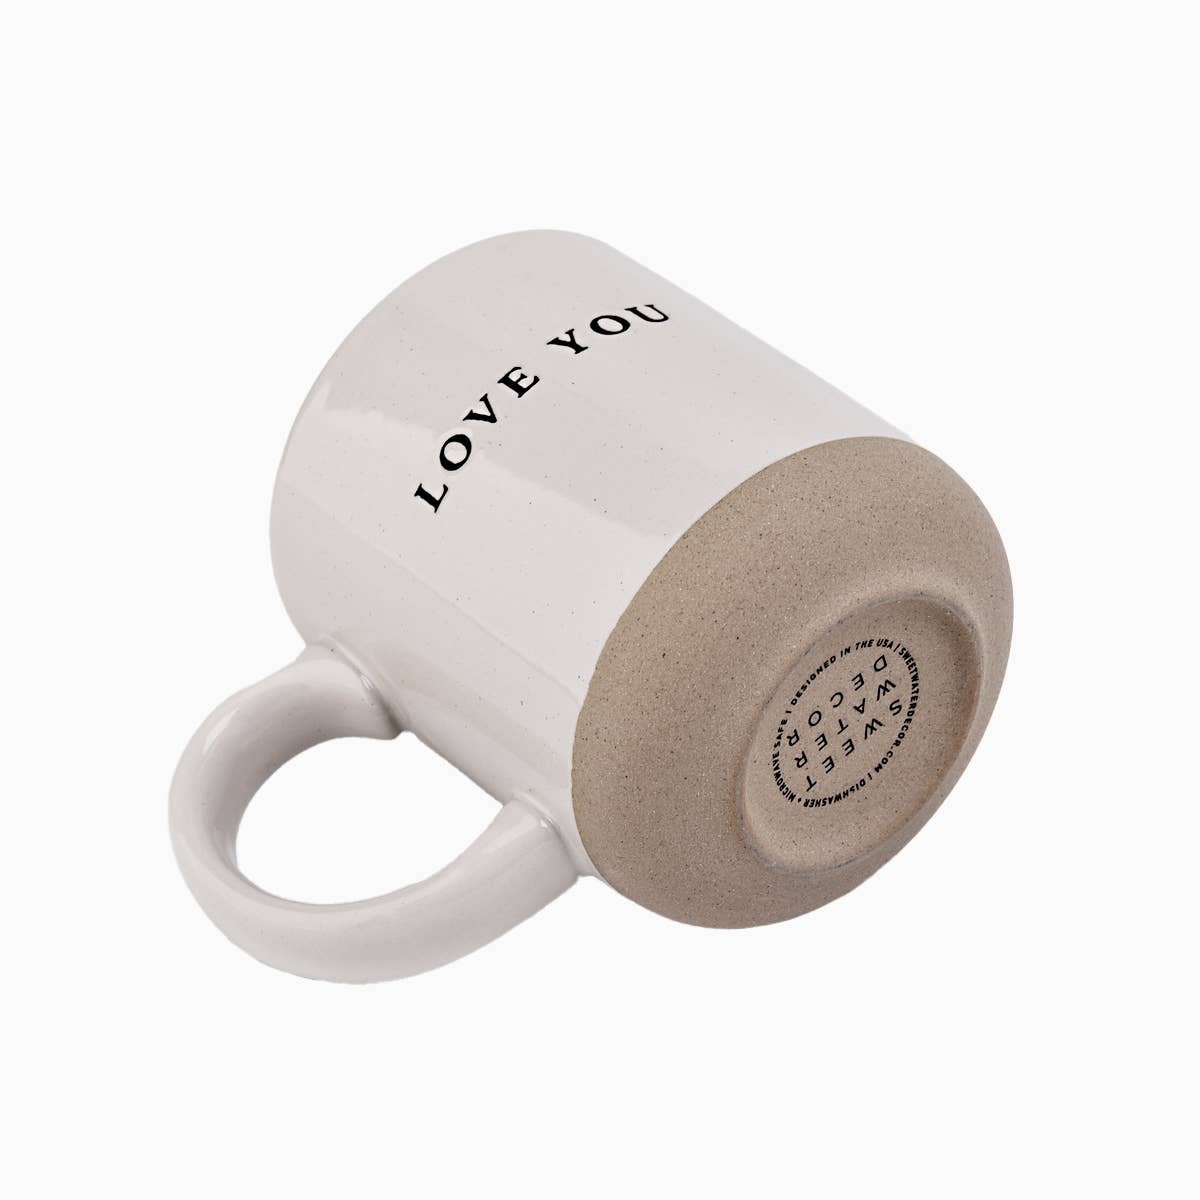 Love You Stoneware Coffee Mug - Gifts &amp; Home Decor - Olivia Macaron